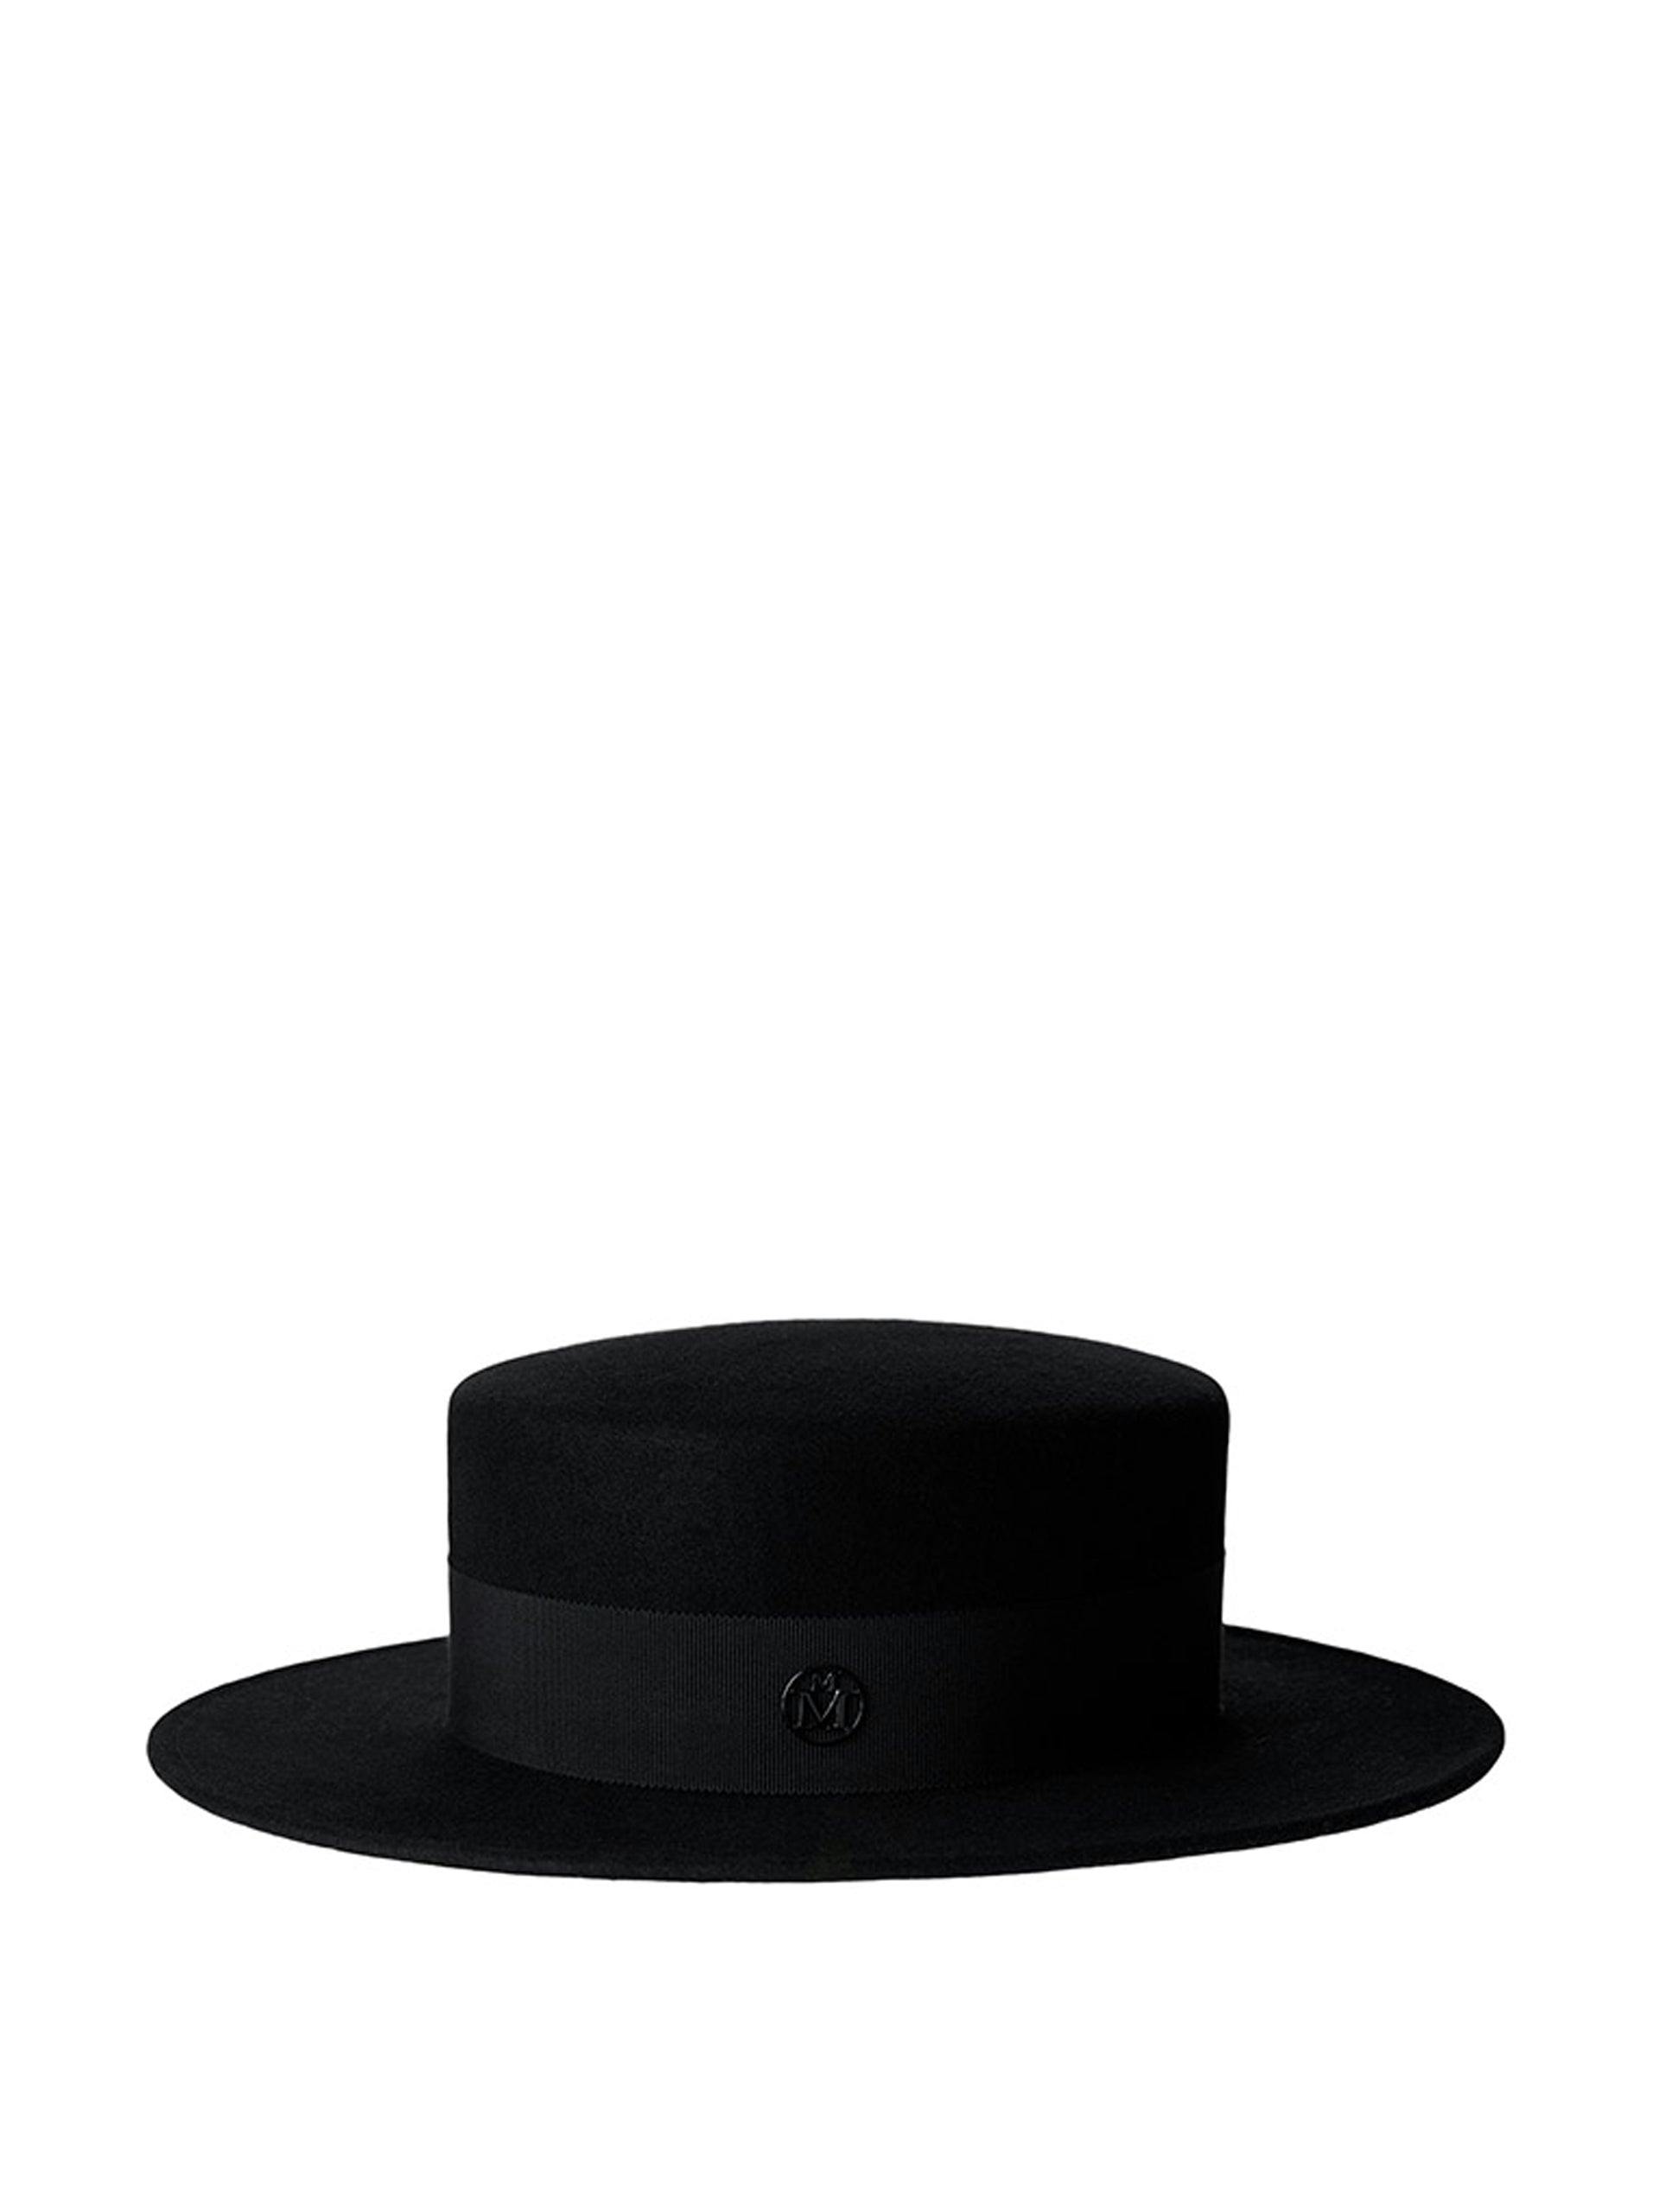 Kiki black felt canotier hat